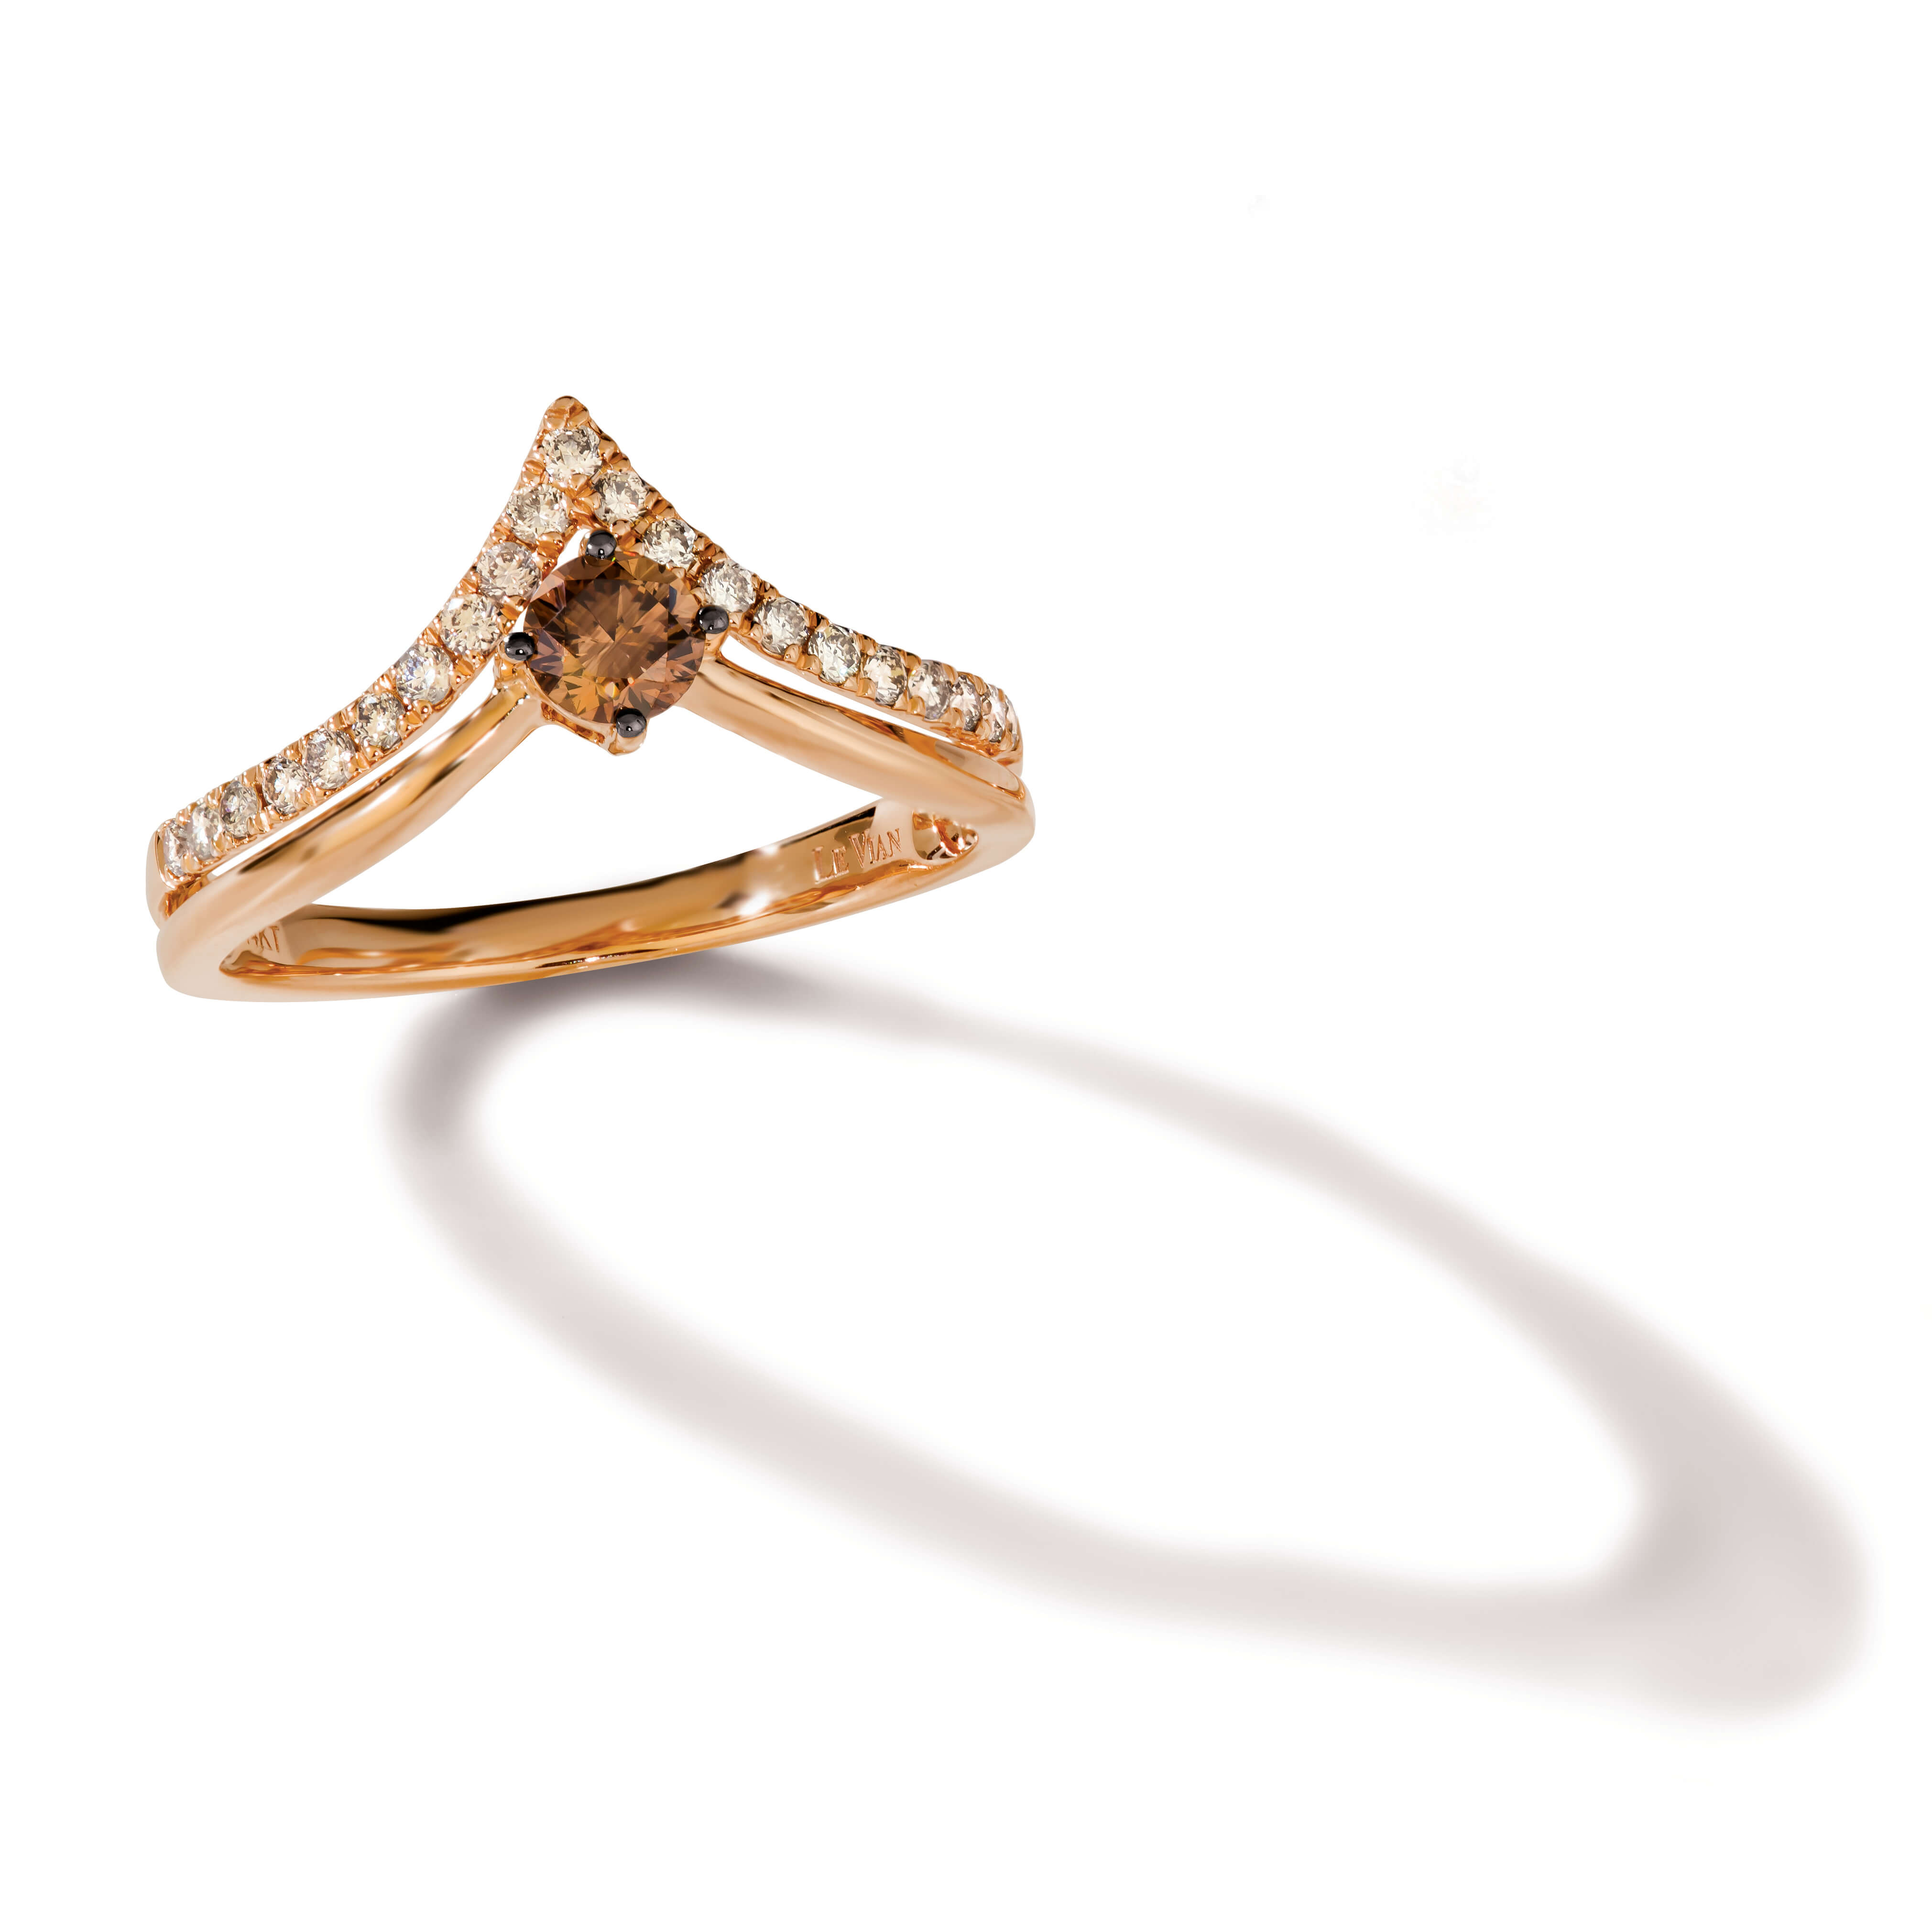 Inel din Aur Roz 14K cu Diamante 0.47Ct, articol TREN 50, previzualizare foto 6